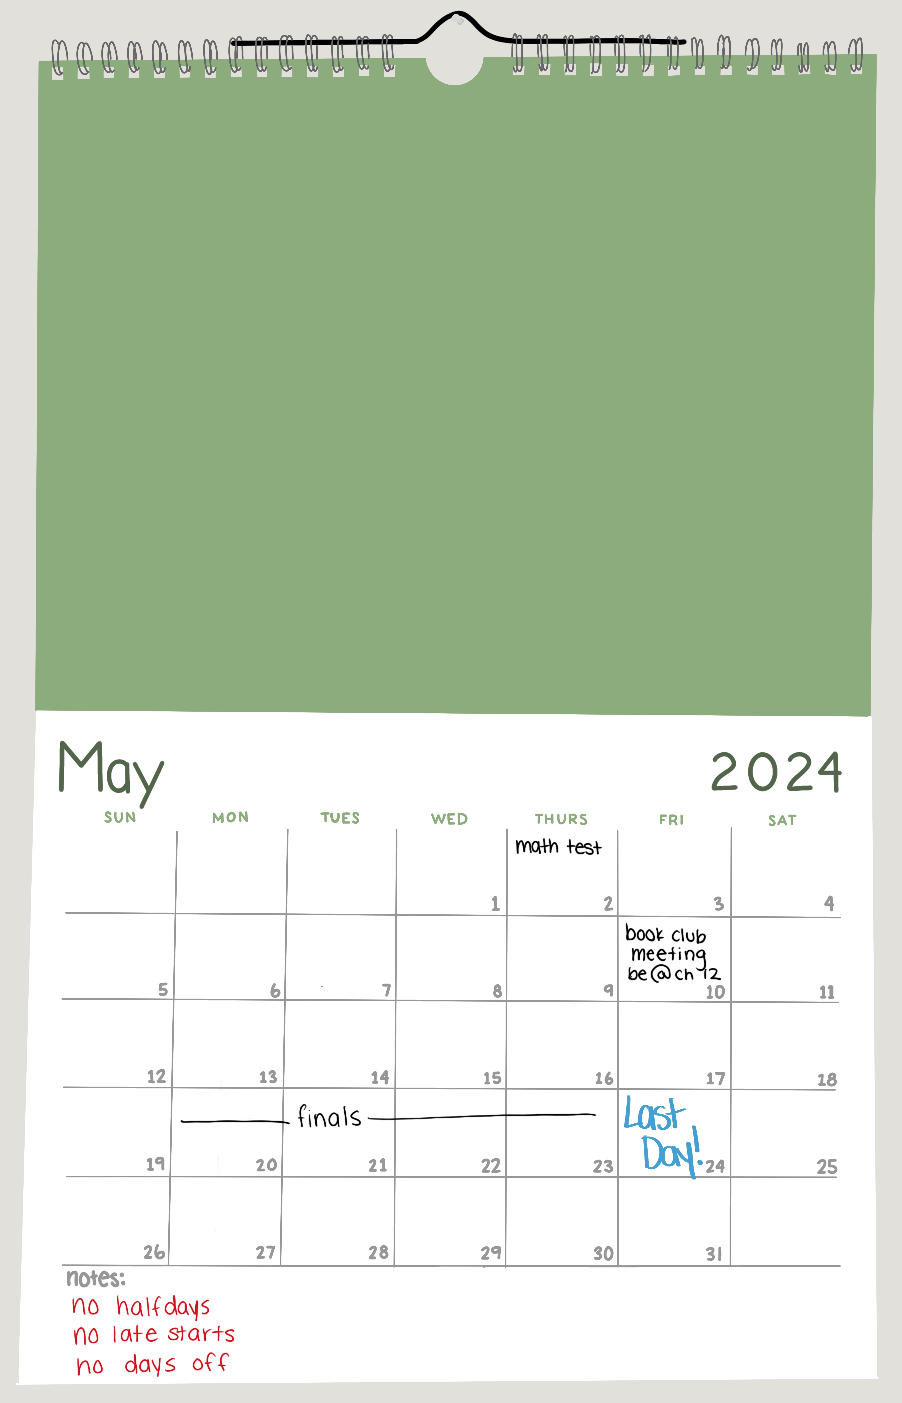 Rockwood Calendar Proposal